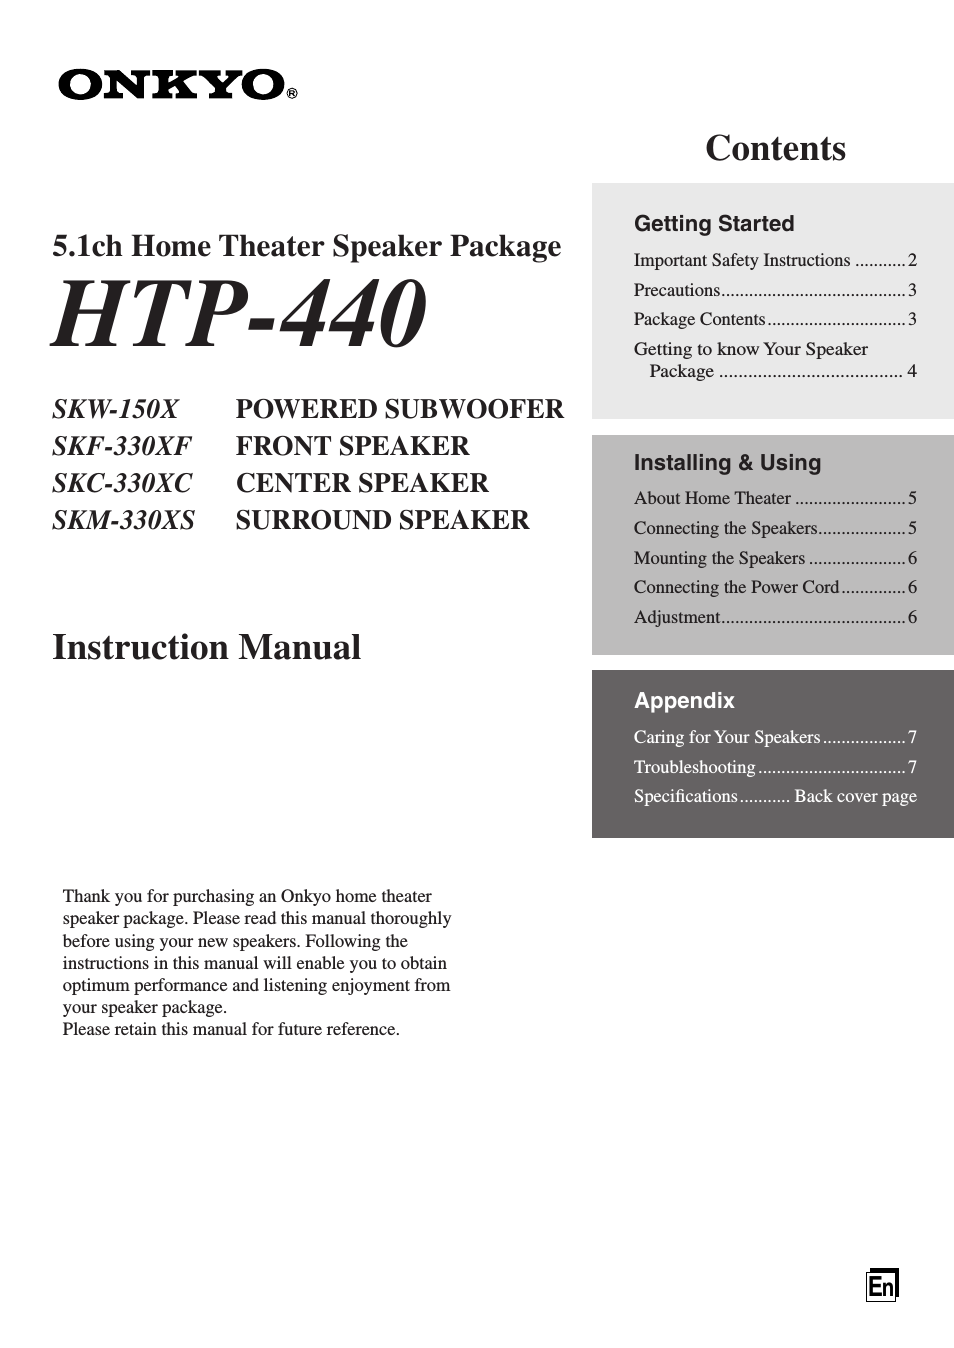 HTP-440